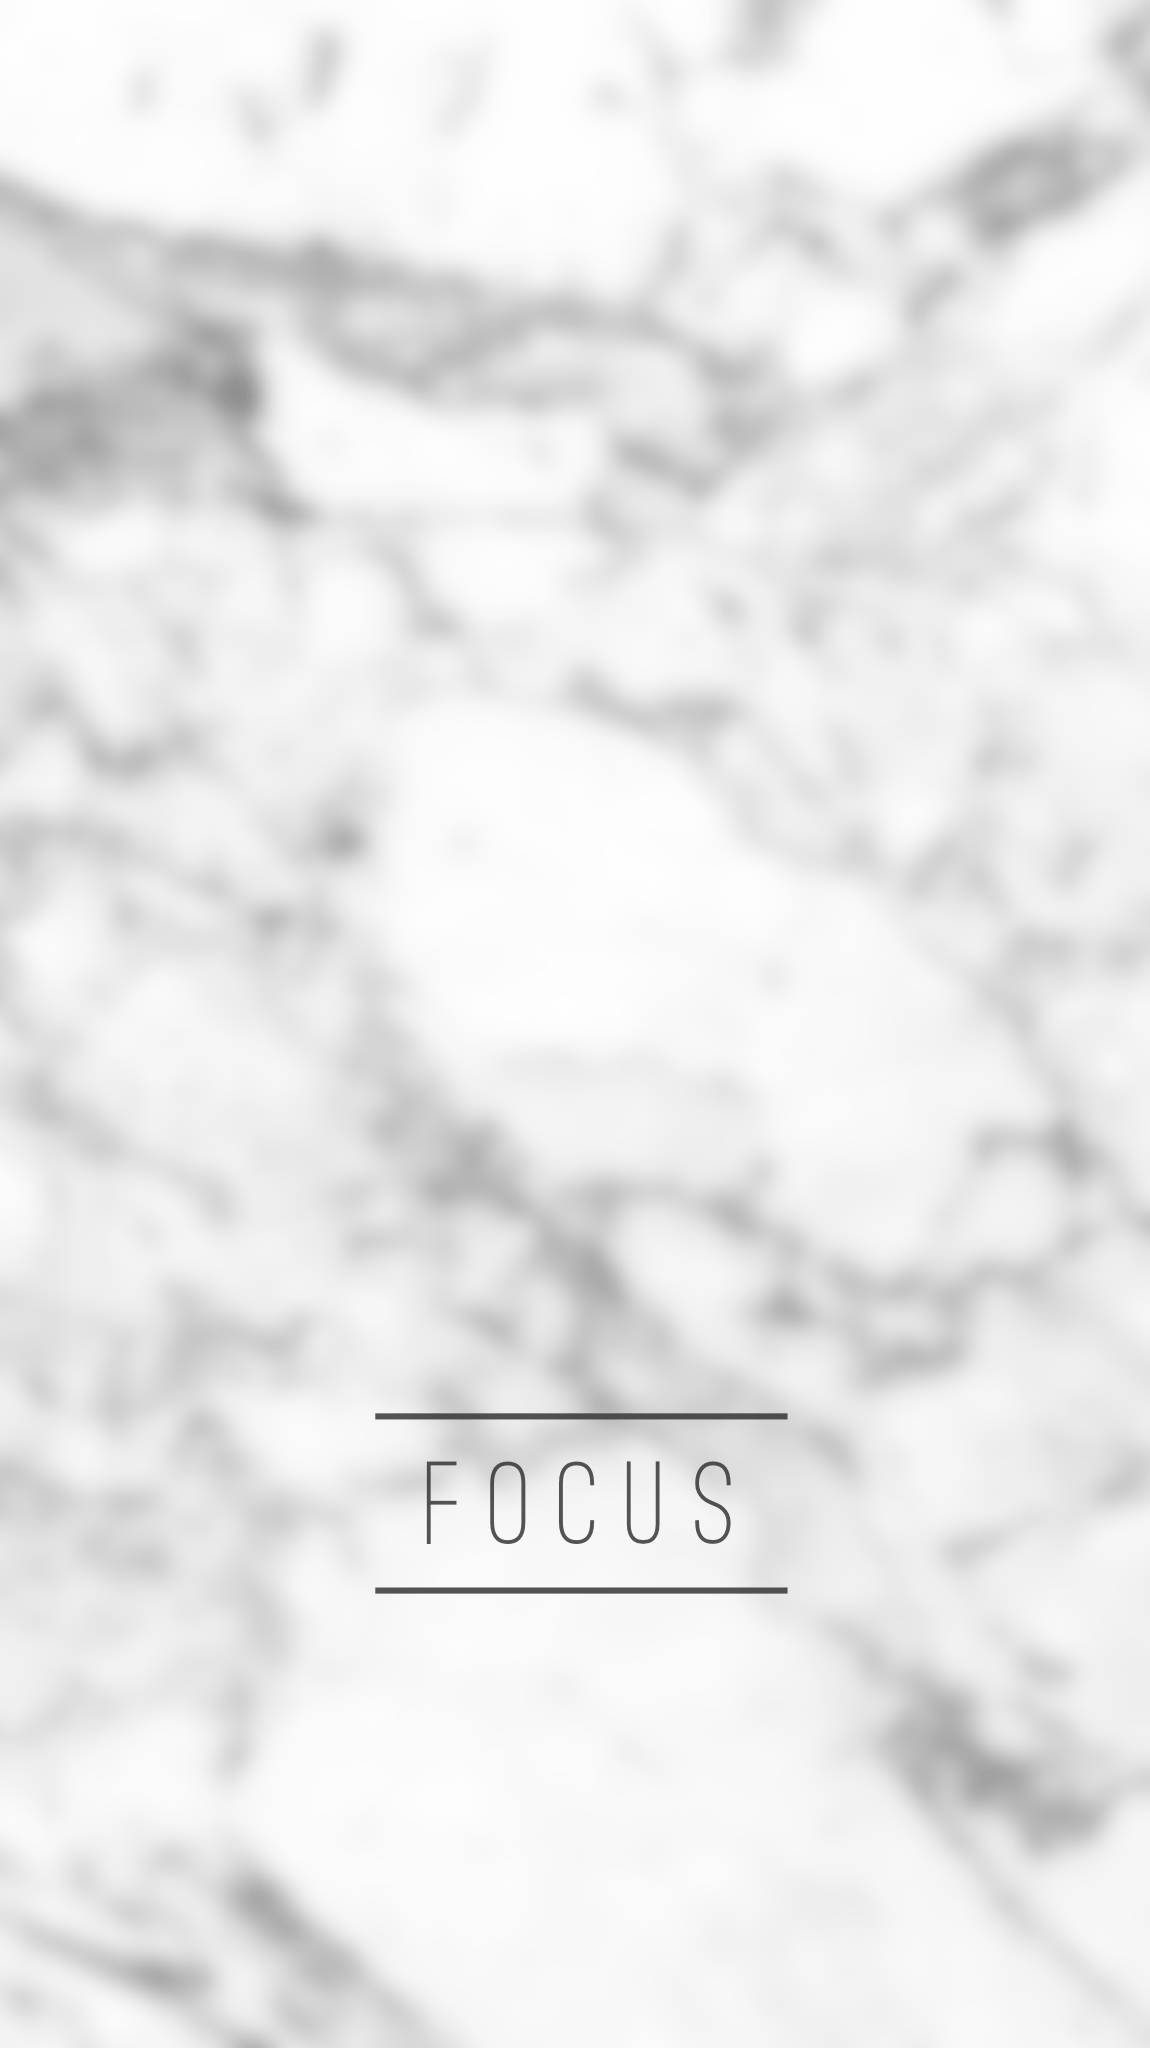 Focusschwarz Weiß Marmor Iphone Wallpaper